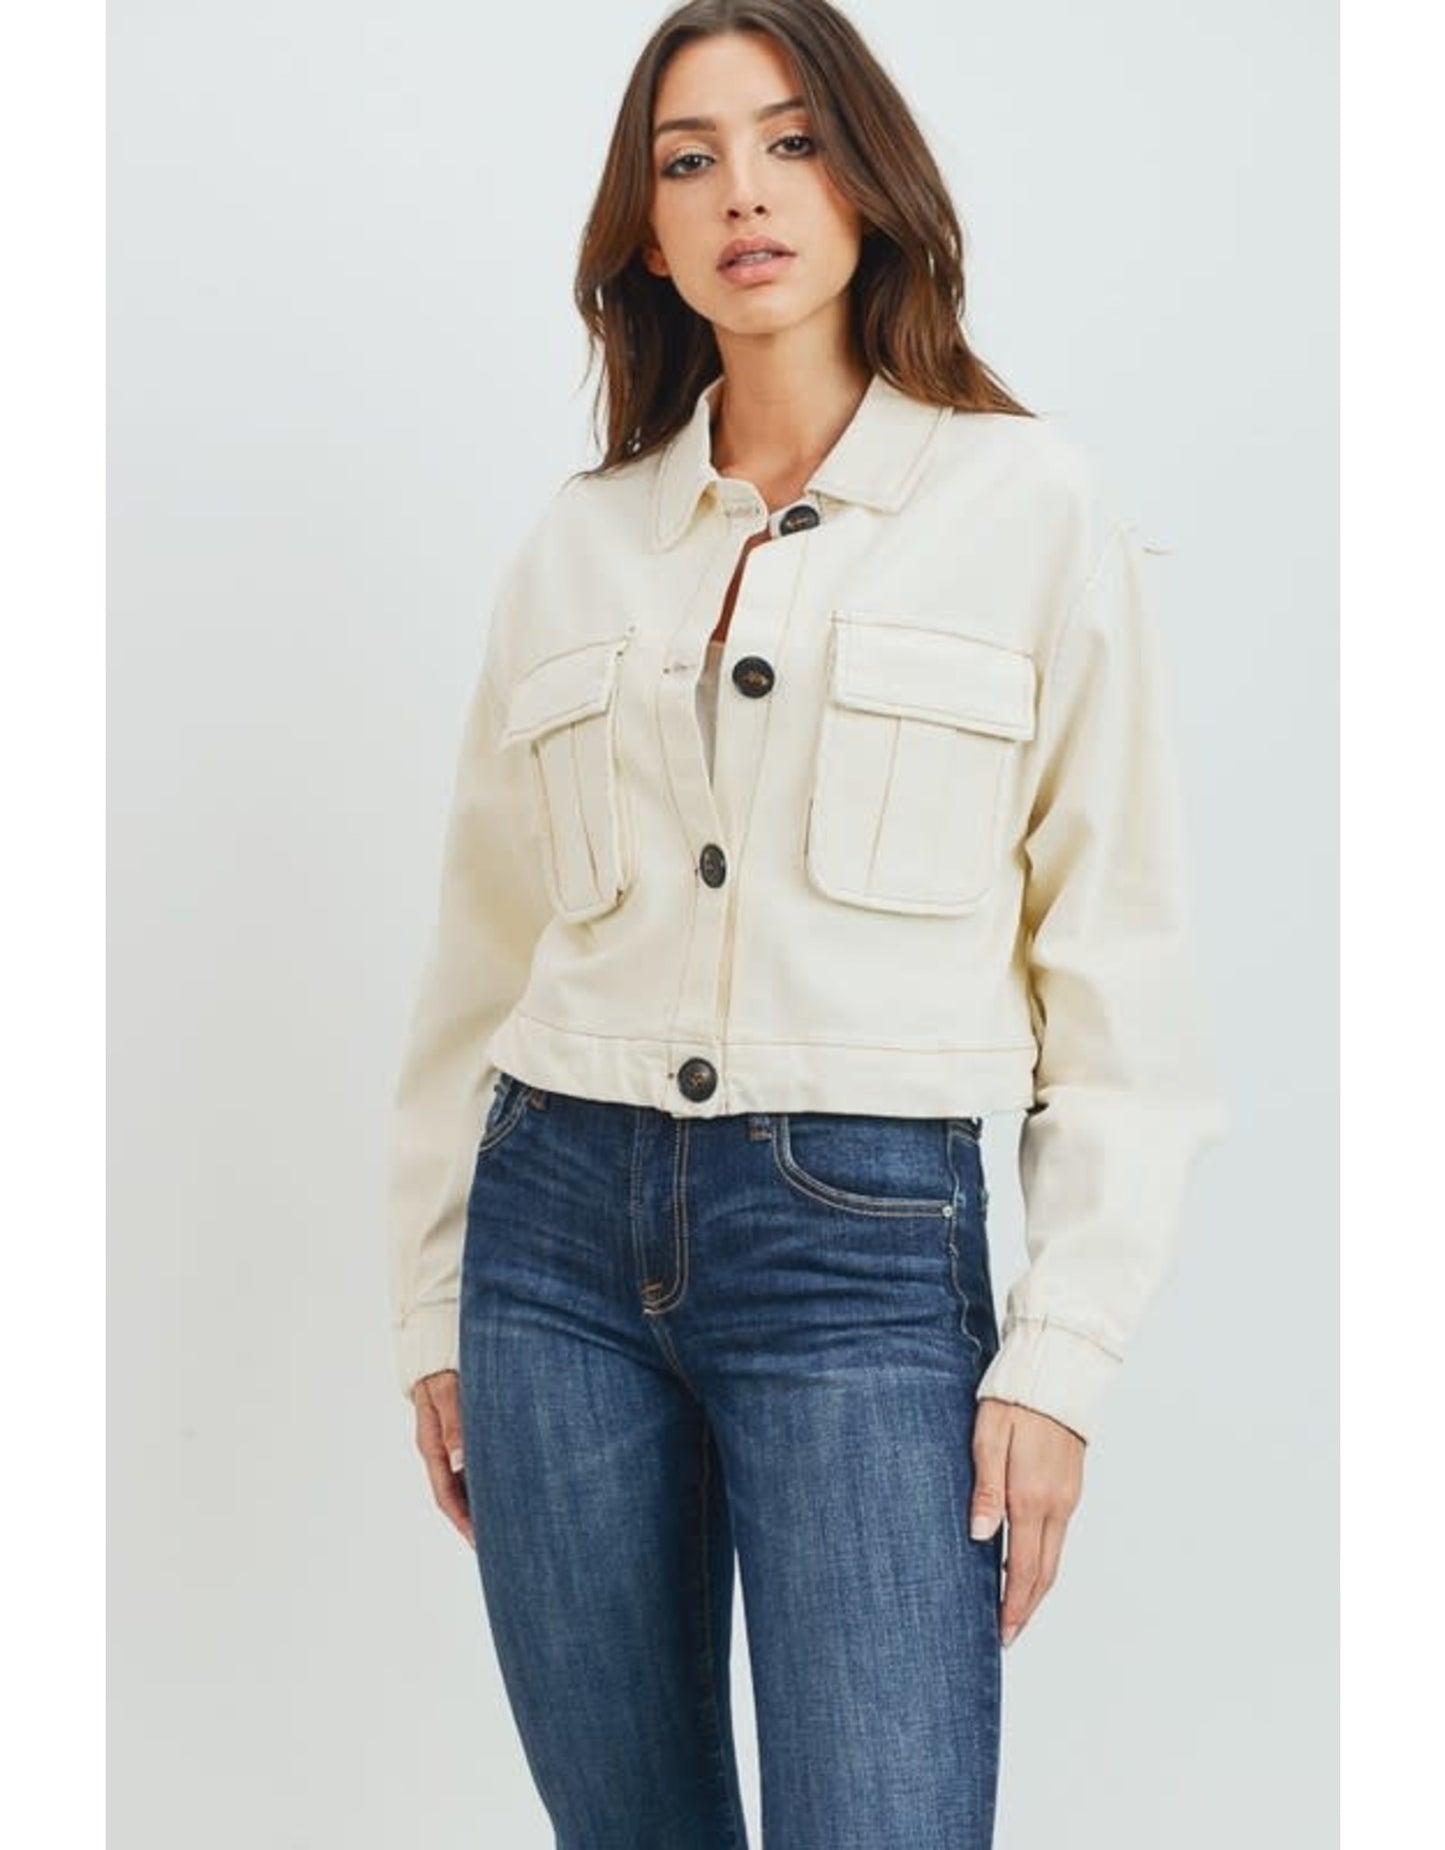 Off White Soft Denim Crop Jacket with Large Pockets (6879959318562)